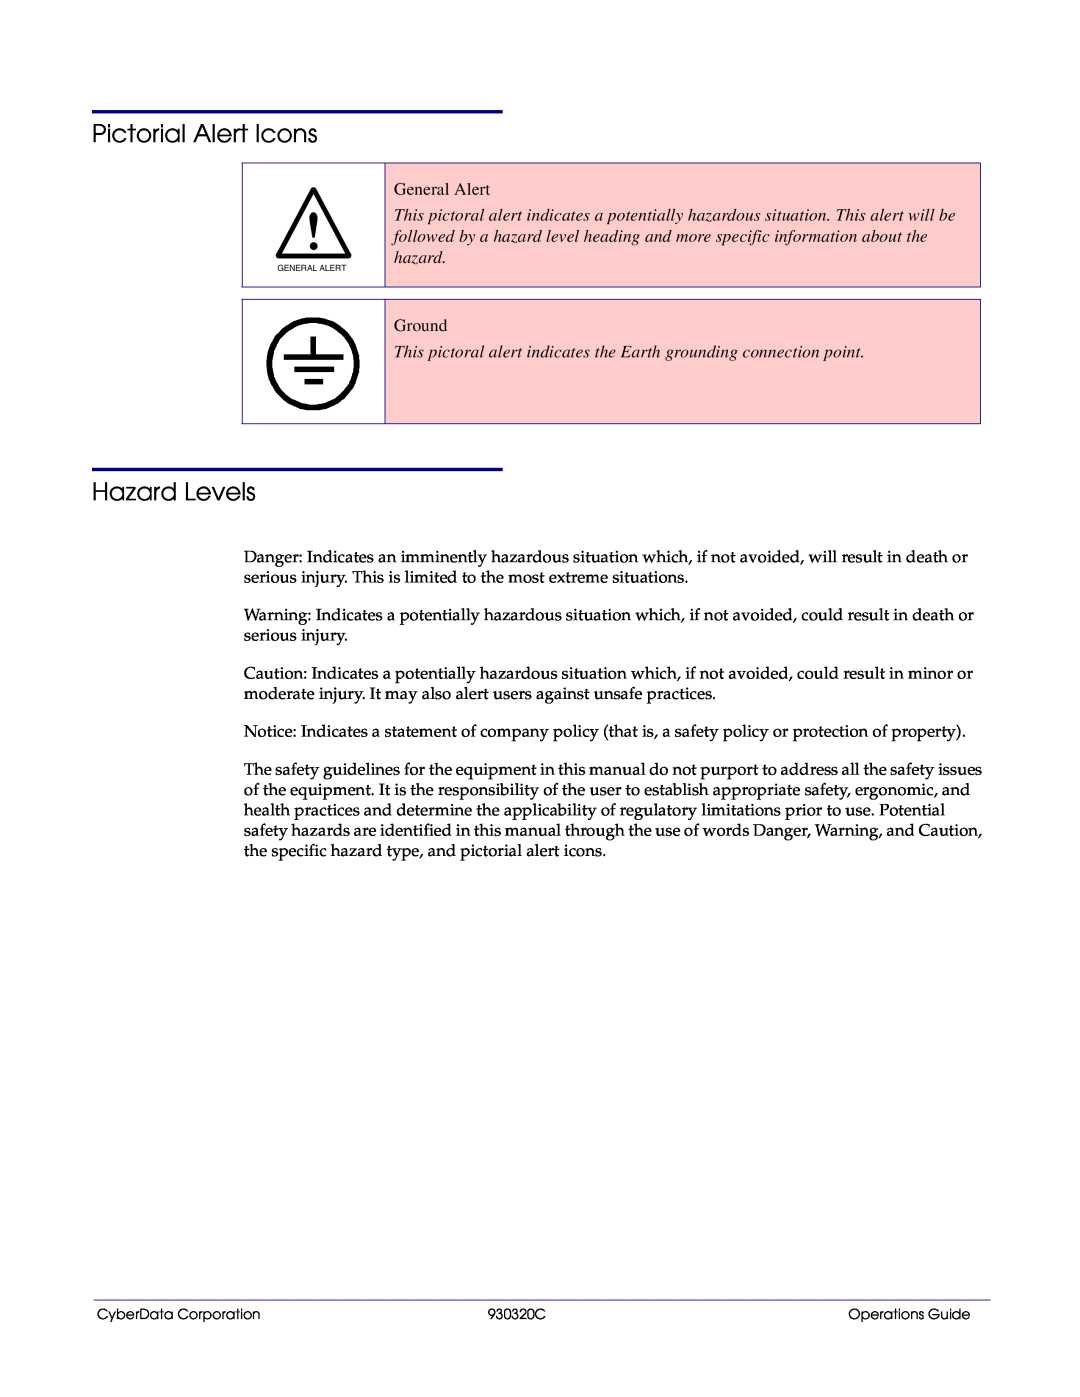 CyberData 11103 manual Pictorial Alert Icons, Hazard Levels, General Alert, Ground 